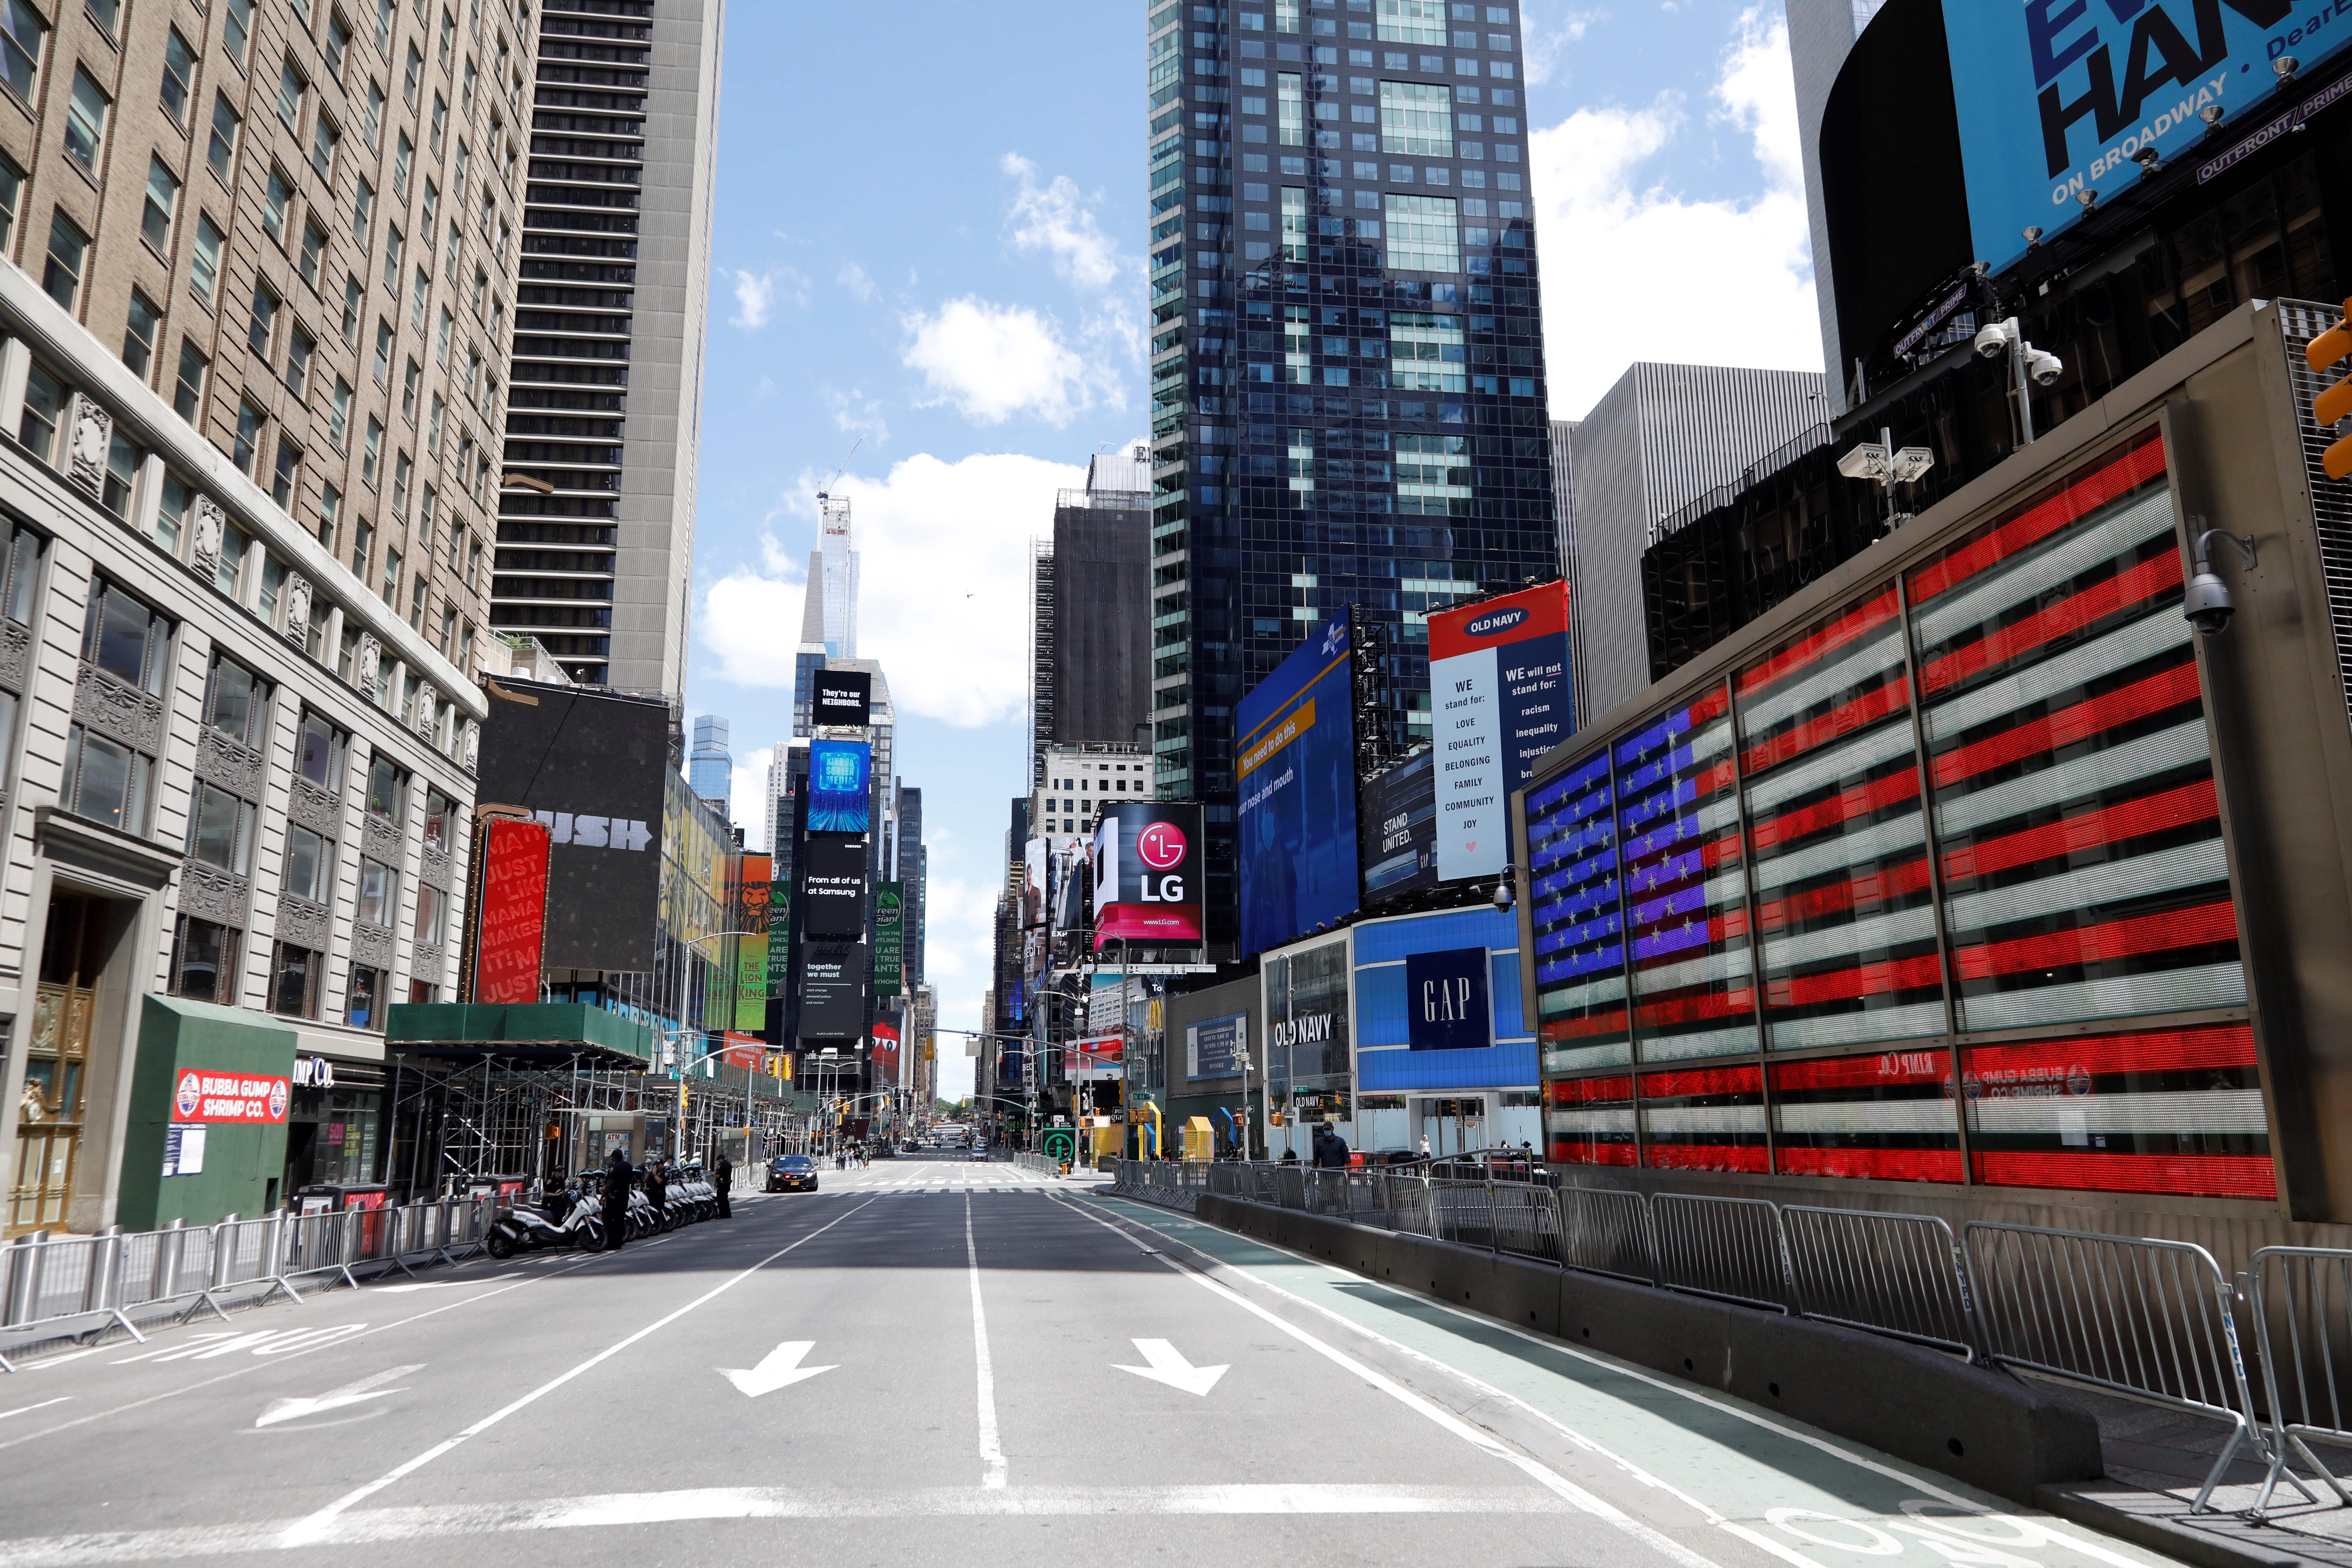 Un día antes de la reapertura, la popular Times Square lucía vacía. Foto: JASON SZENES / Efe.